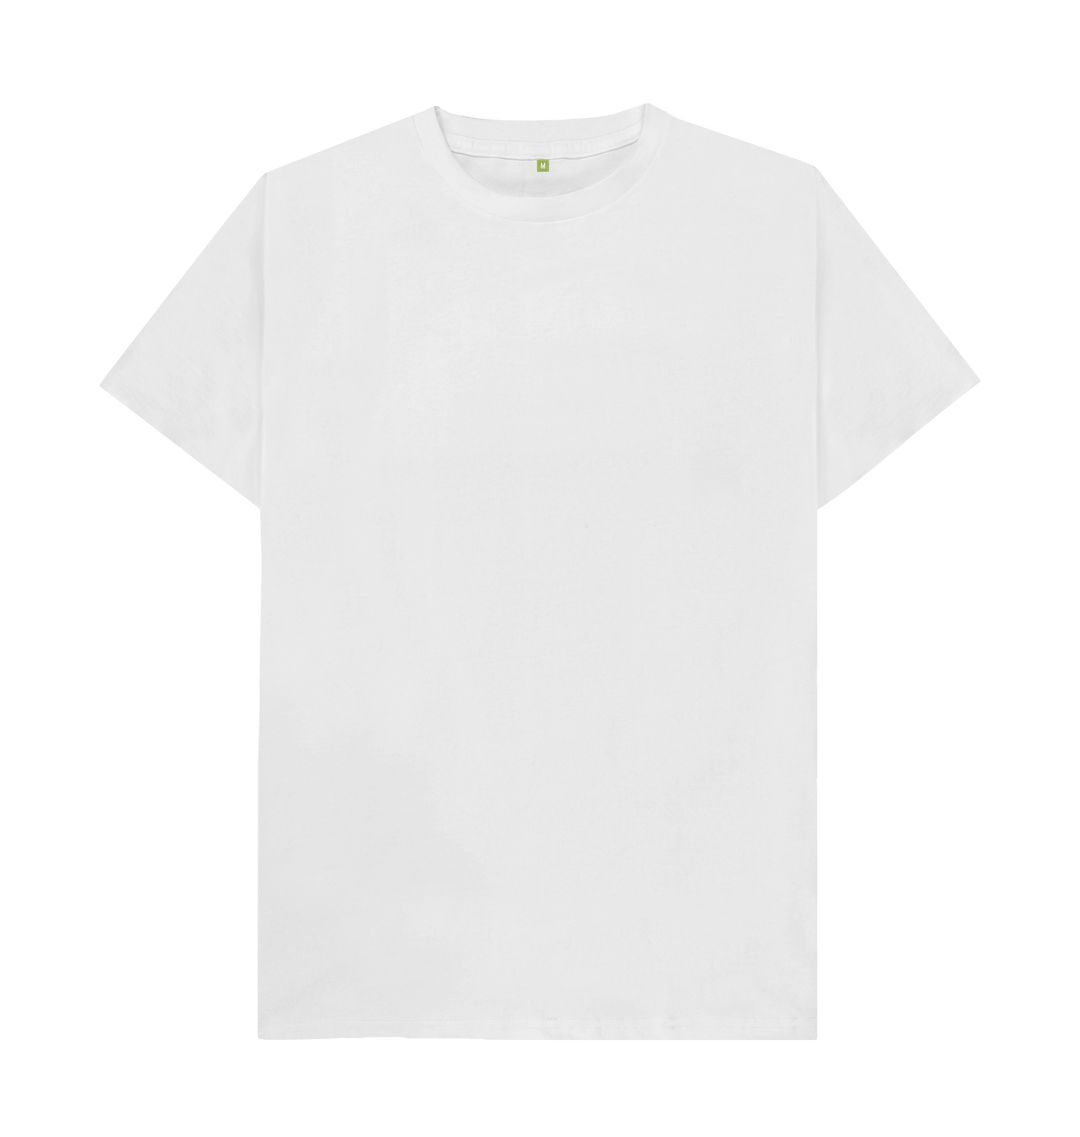 White Men's organic cotton t-shirt